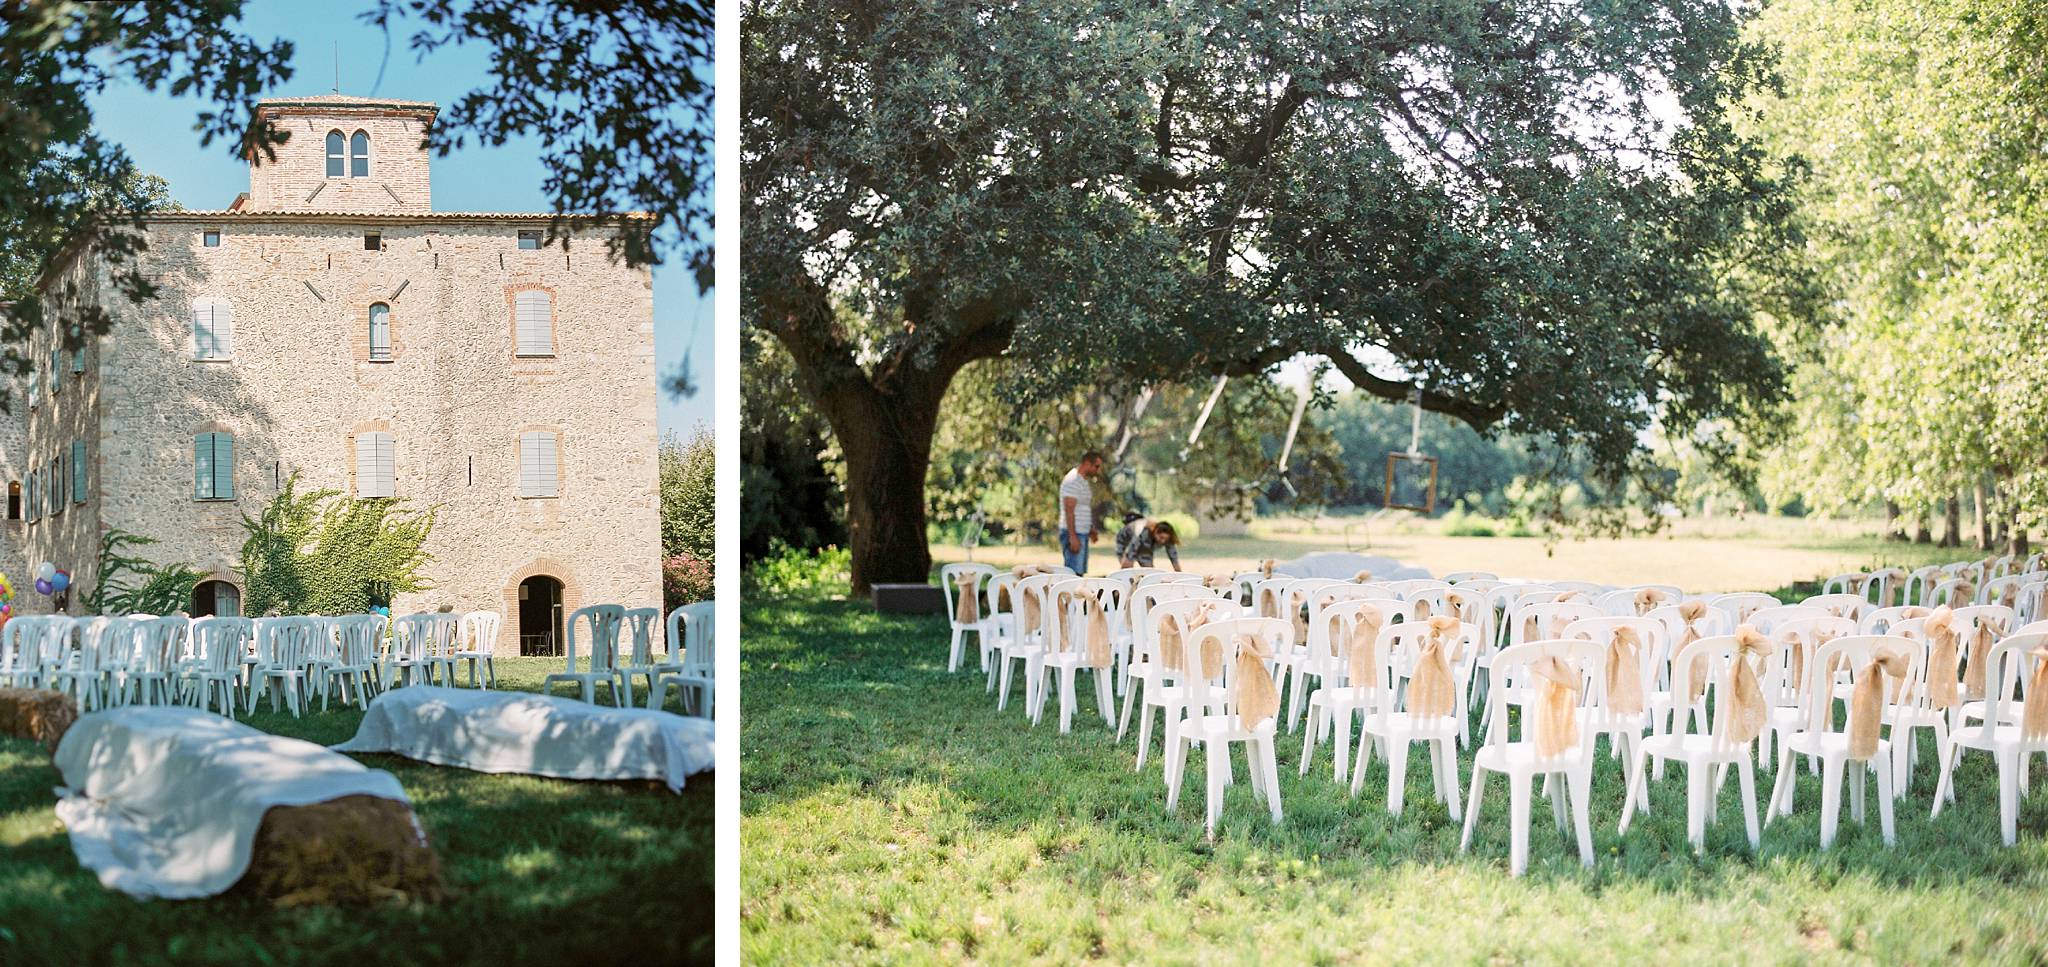 Mariage au château de Villeclare - Hugo Hennequin Photographe Perpignan Sud de France - Laeti + David-0006.jpg